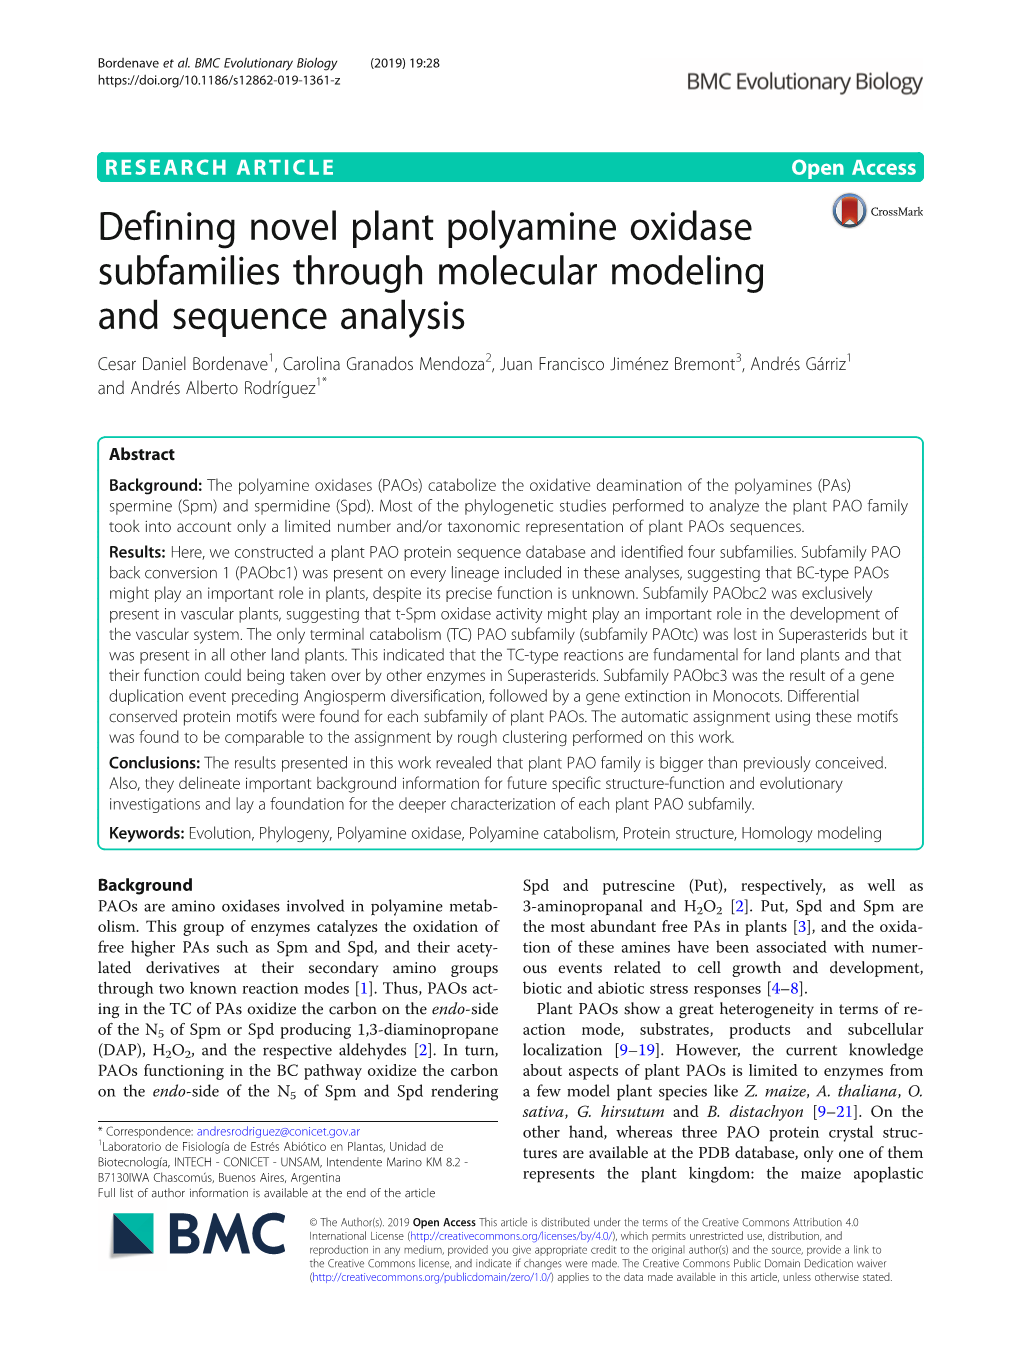 Defining Novel Plant Polyamine Oxidase Subfamilies Through